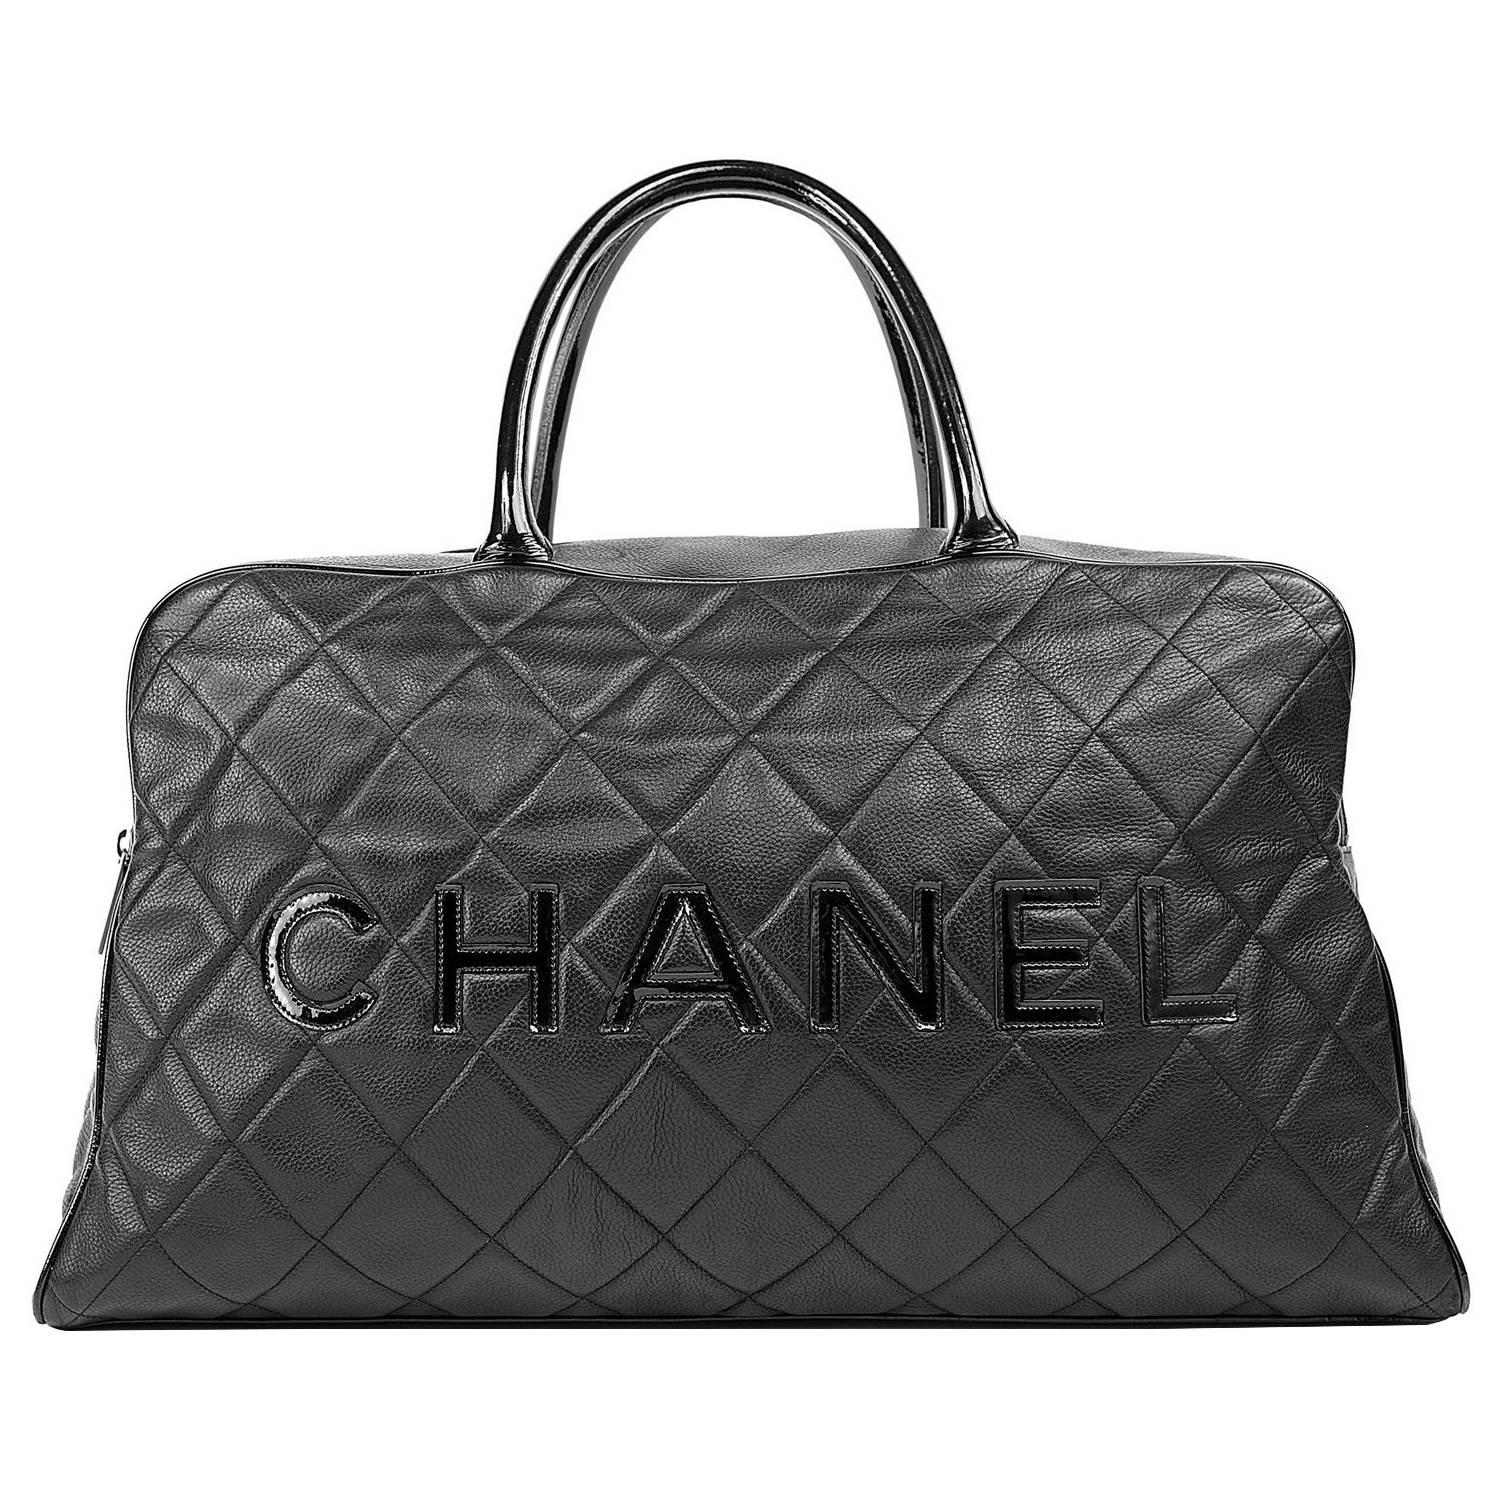 Chanel Black Leather Overnight Travel Bag- Unisex For Sale